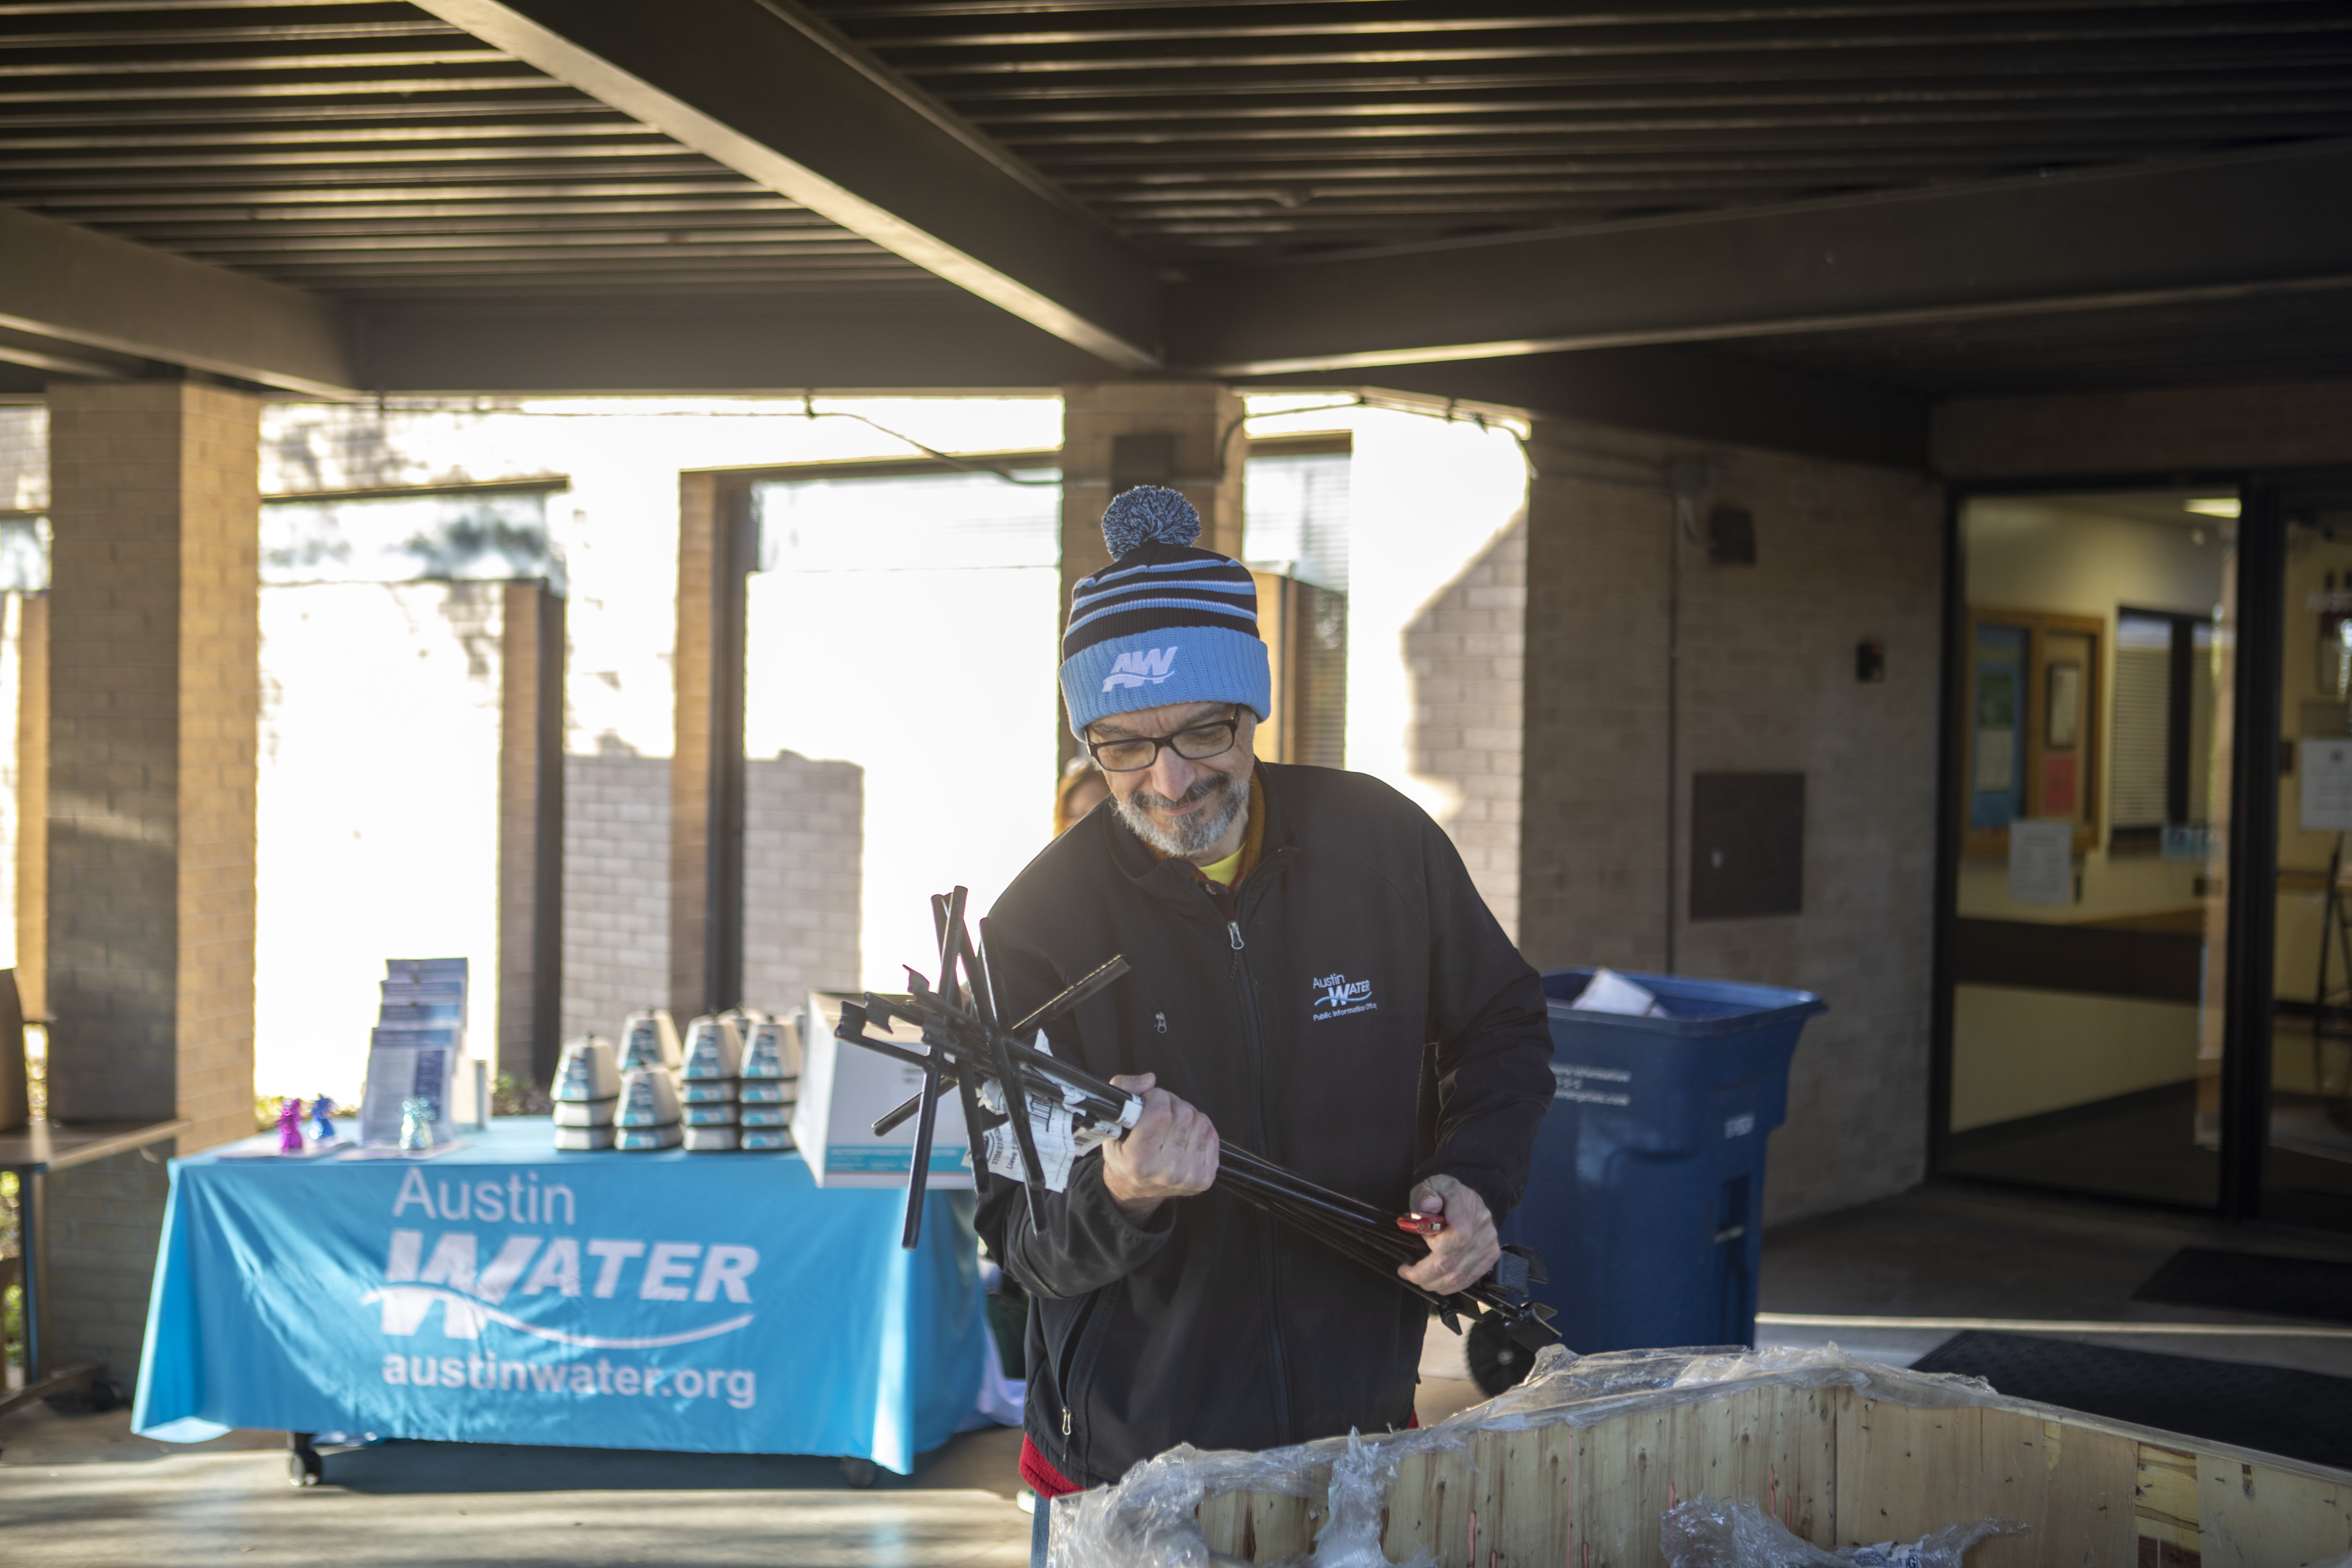 An Austin Water Utility employee sorting water meter keys before distributing them to customers.